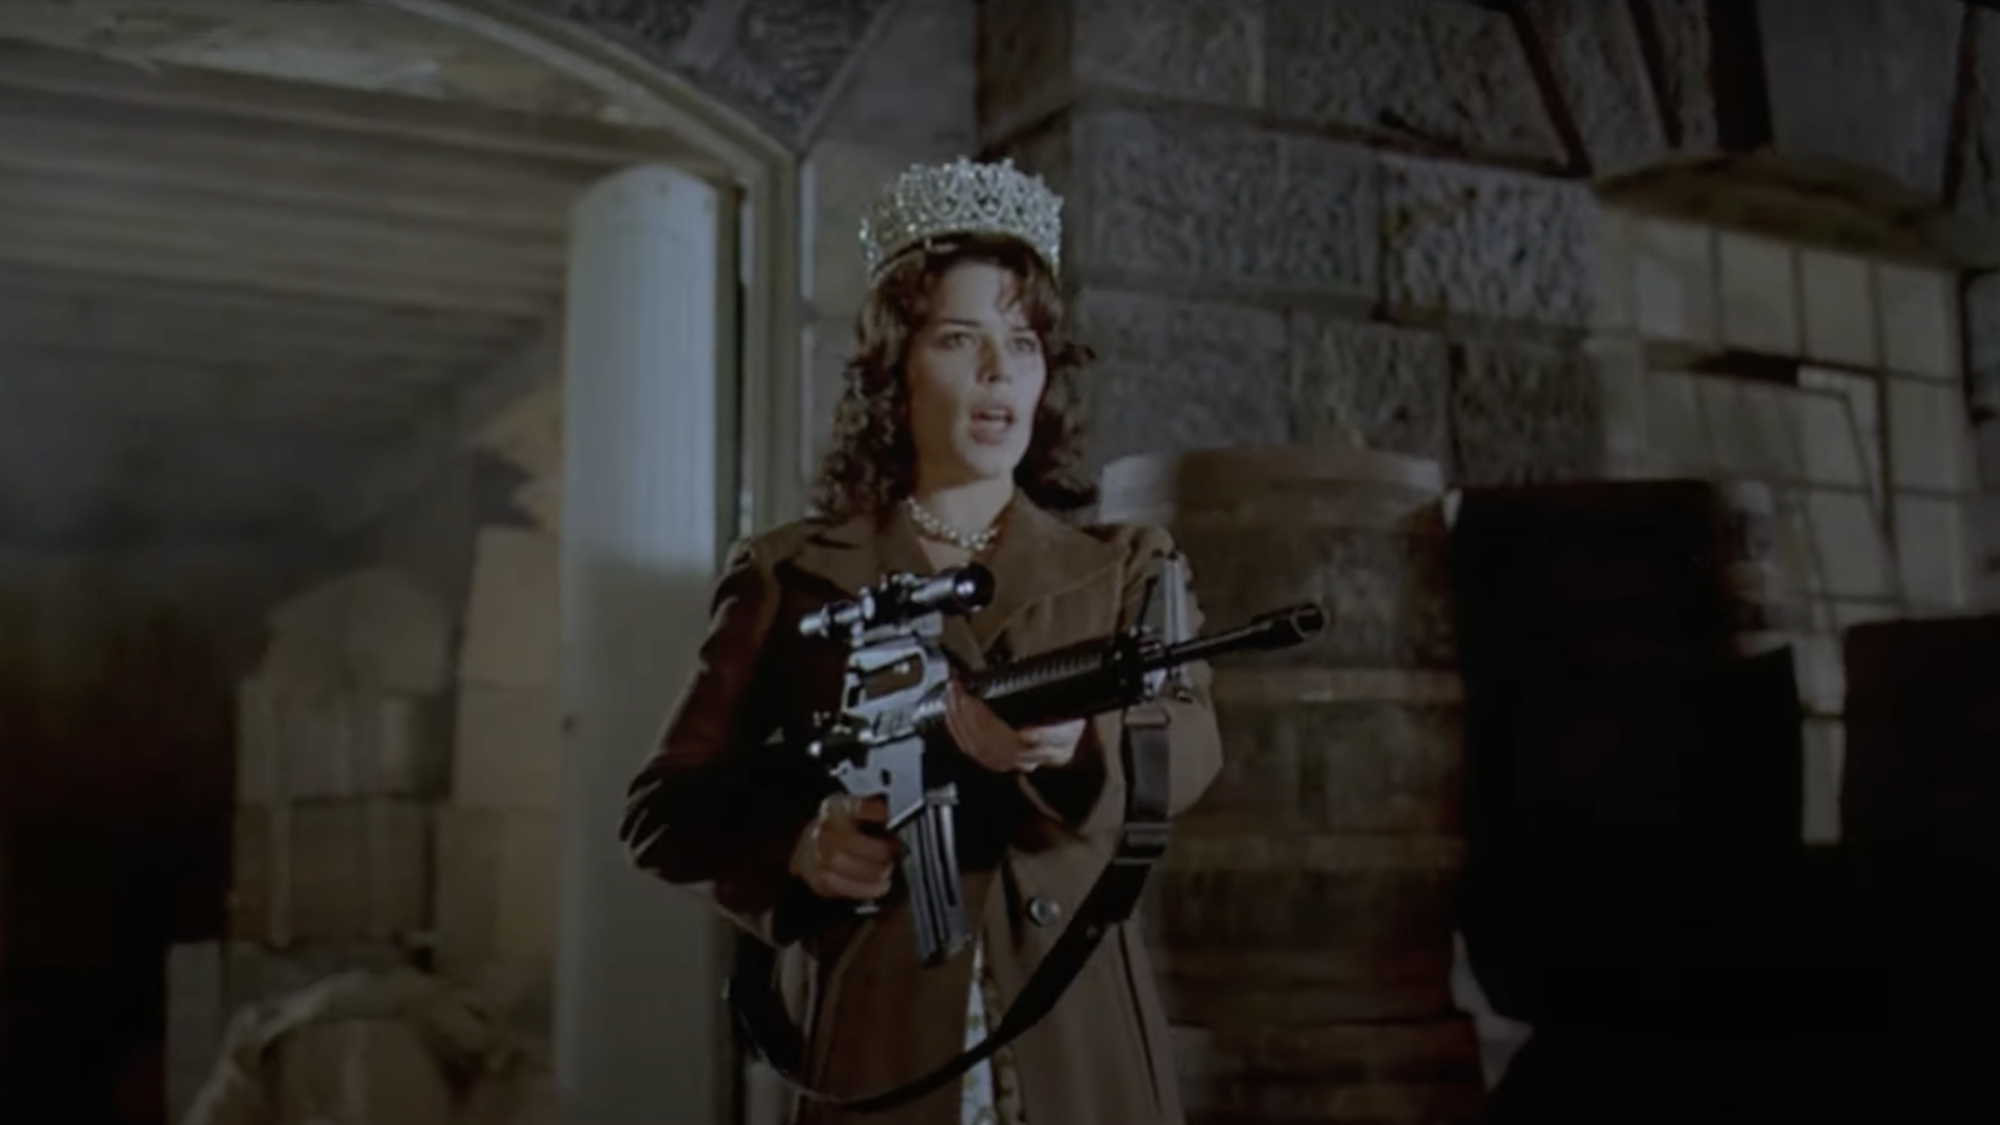 An actor dressed up as Queen Elizabeth II with a machine gun.